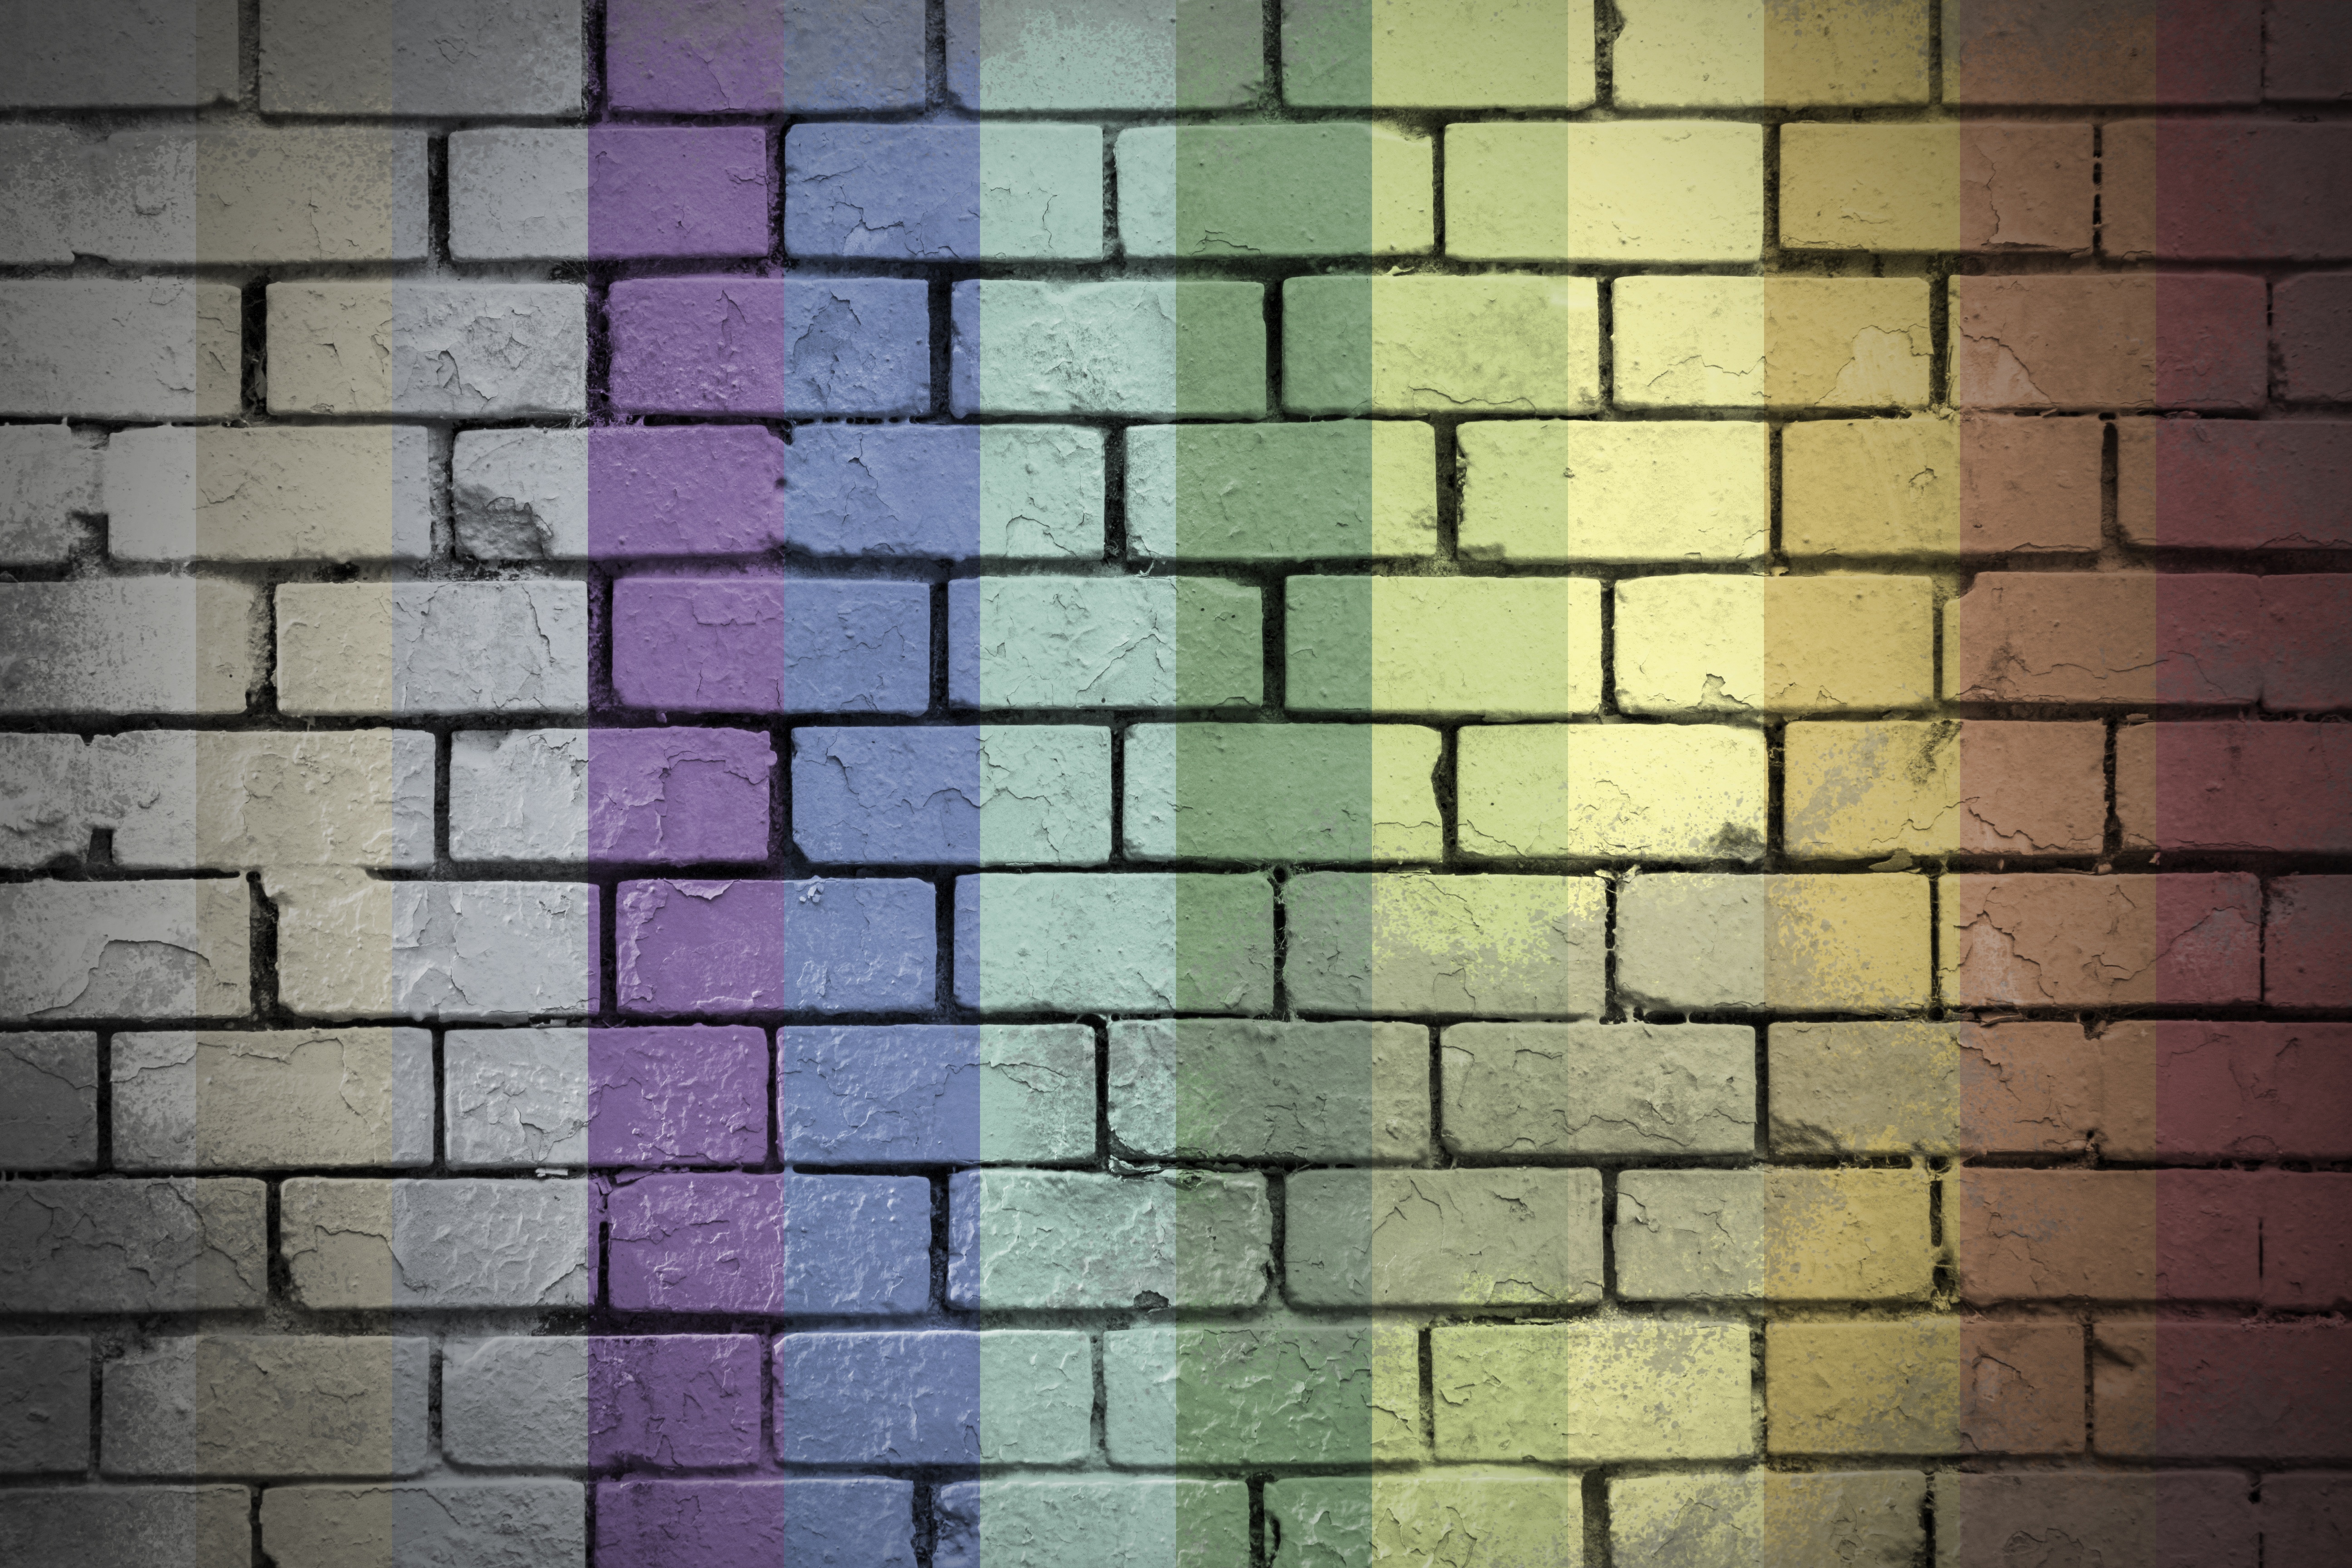 android textures, walls, rainbow, texture, bricks, iridescent